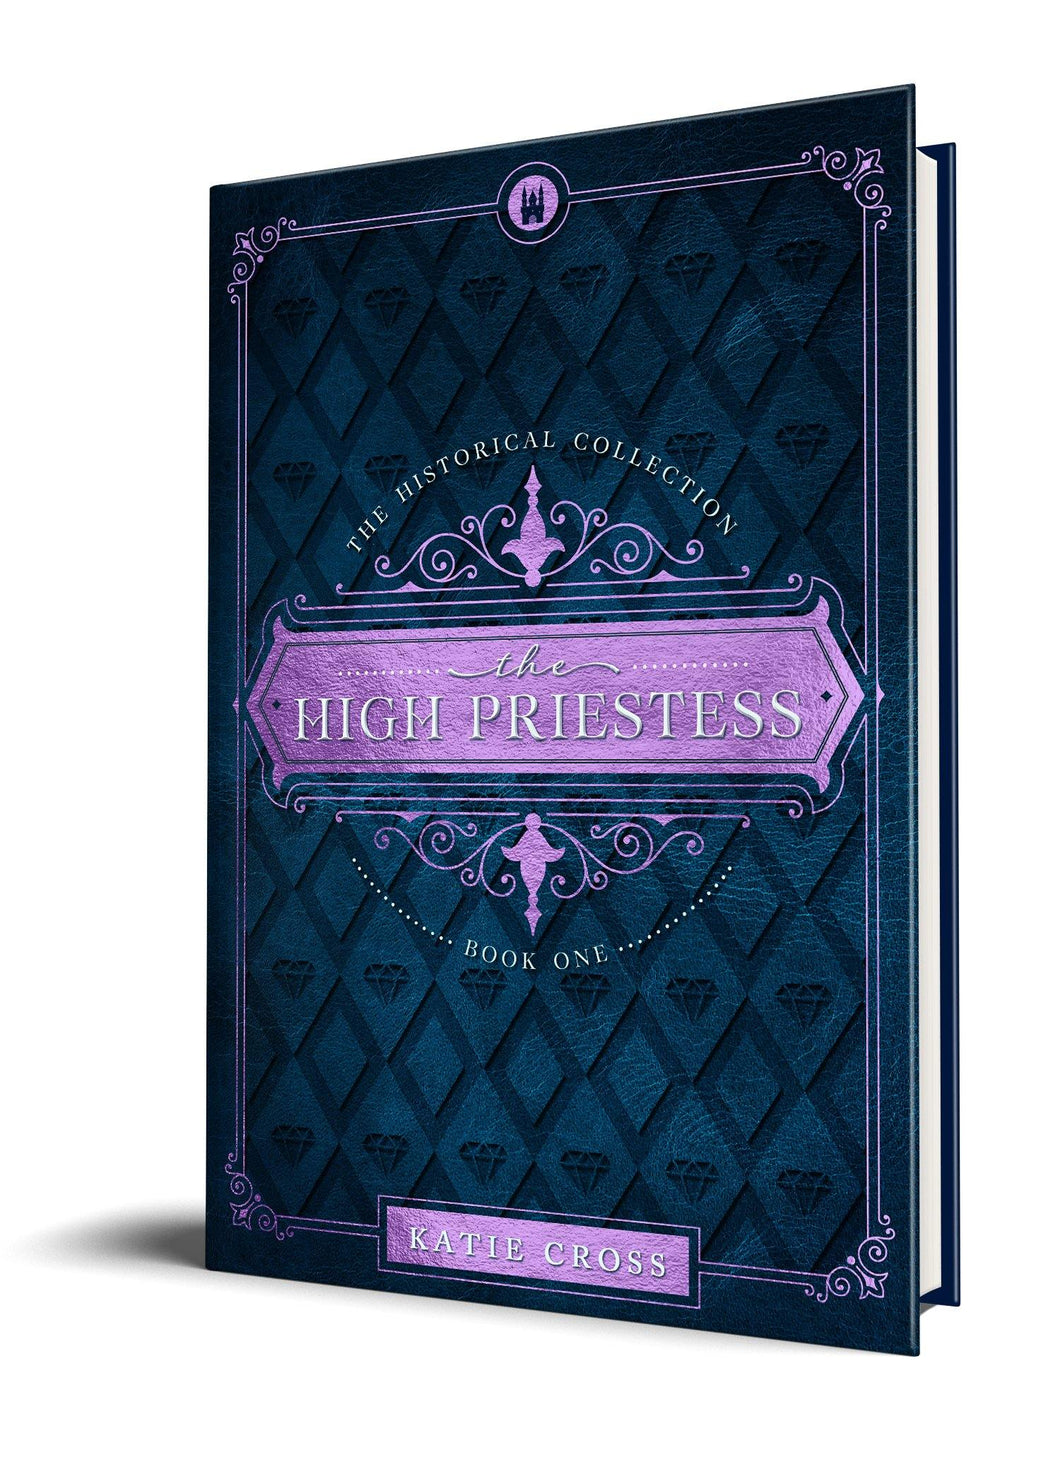 The High Priestess (Paperback Edition) - Katie Cross